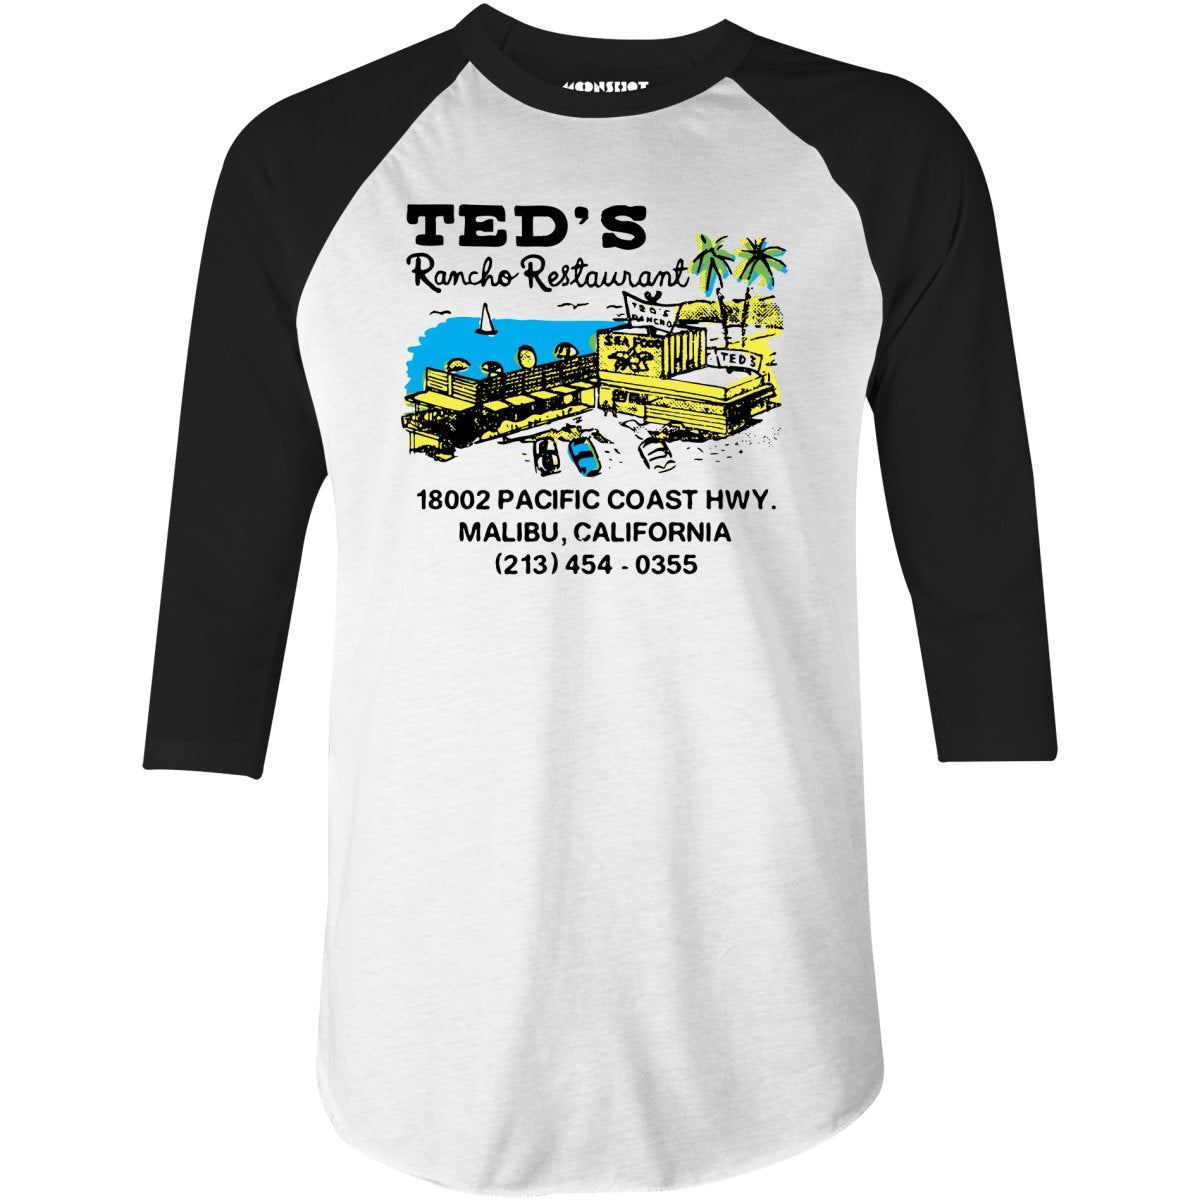 Ted's Rancho Restaurant - Malibu, CA - Vintage Restaurant - 3/4 Sleeve Raglan T-Shirt